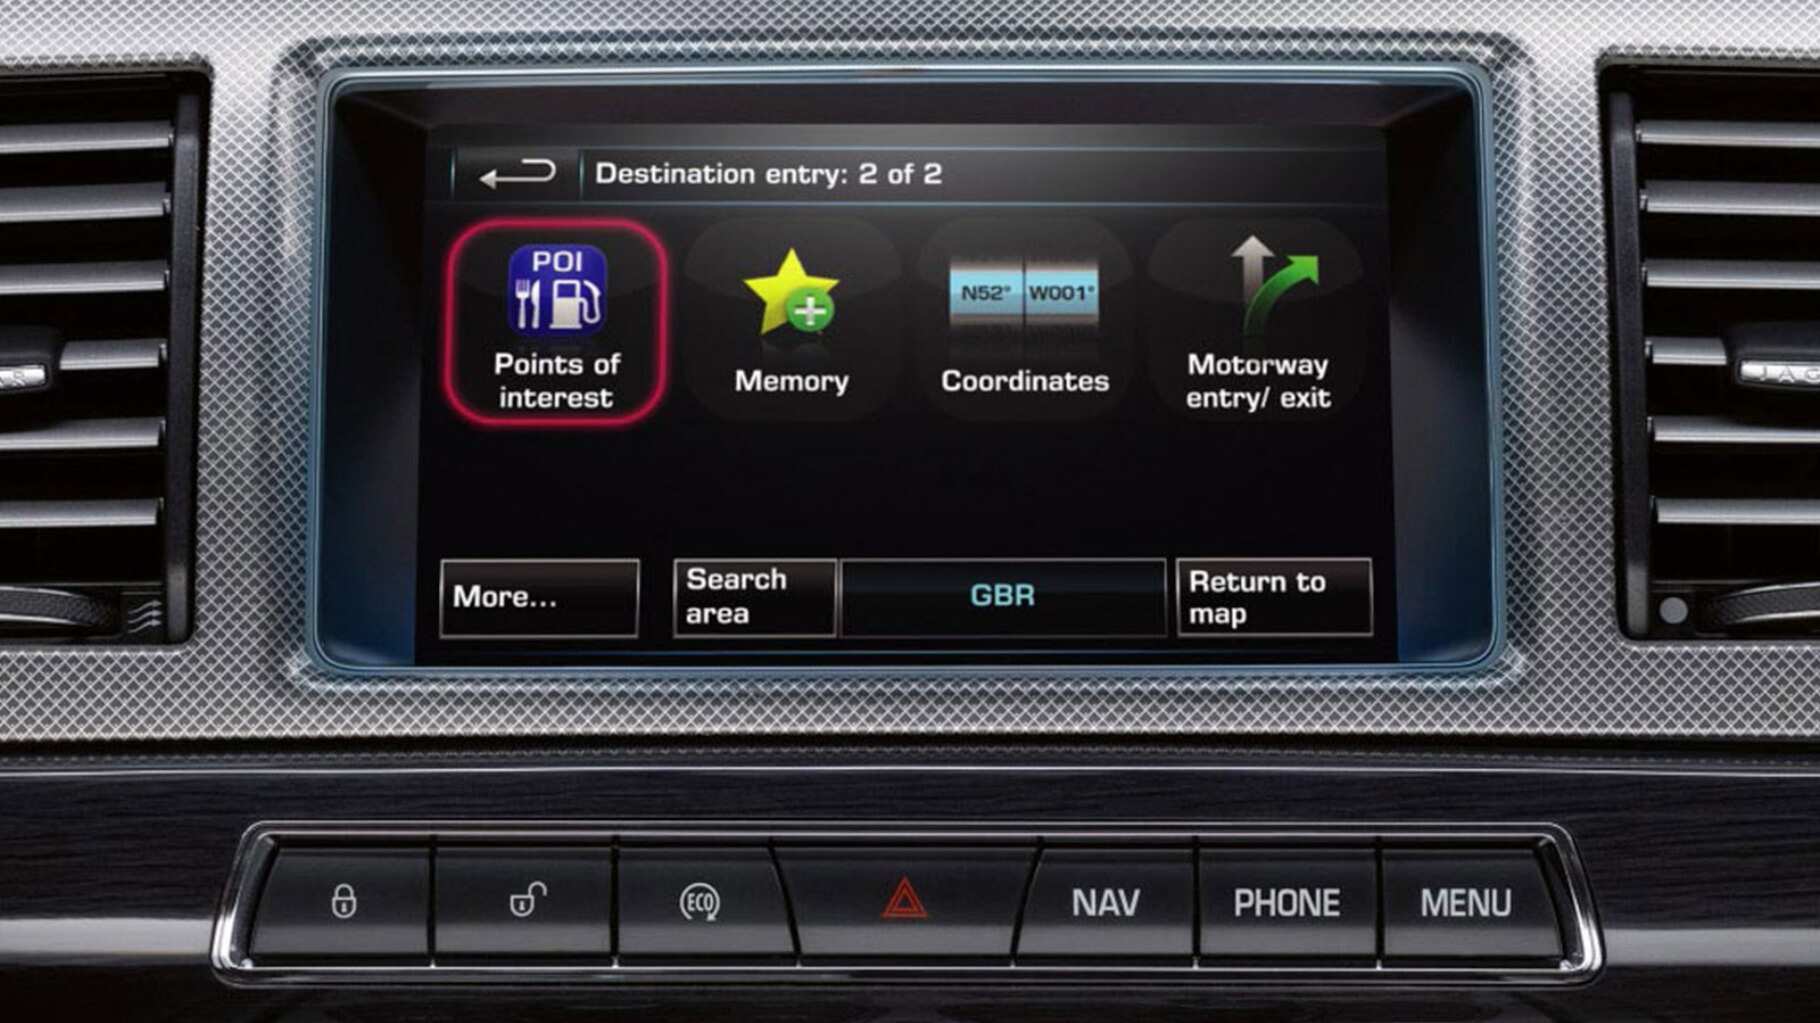 Jaguar XF Navigation System - Points of Interest